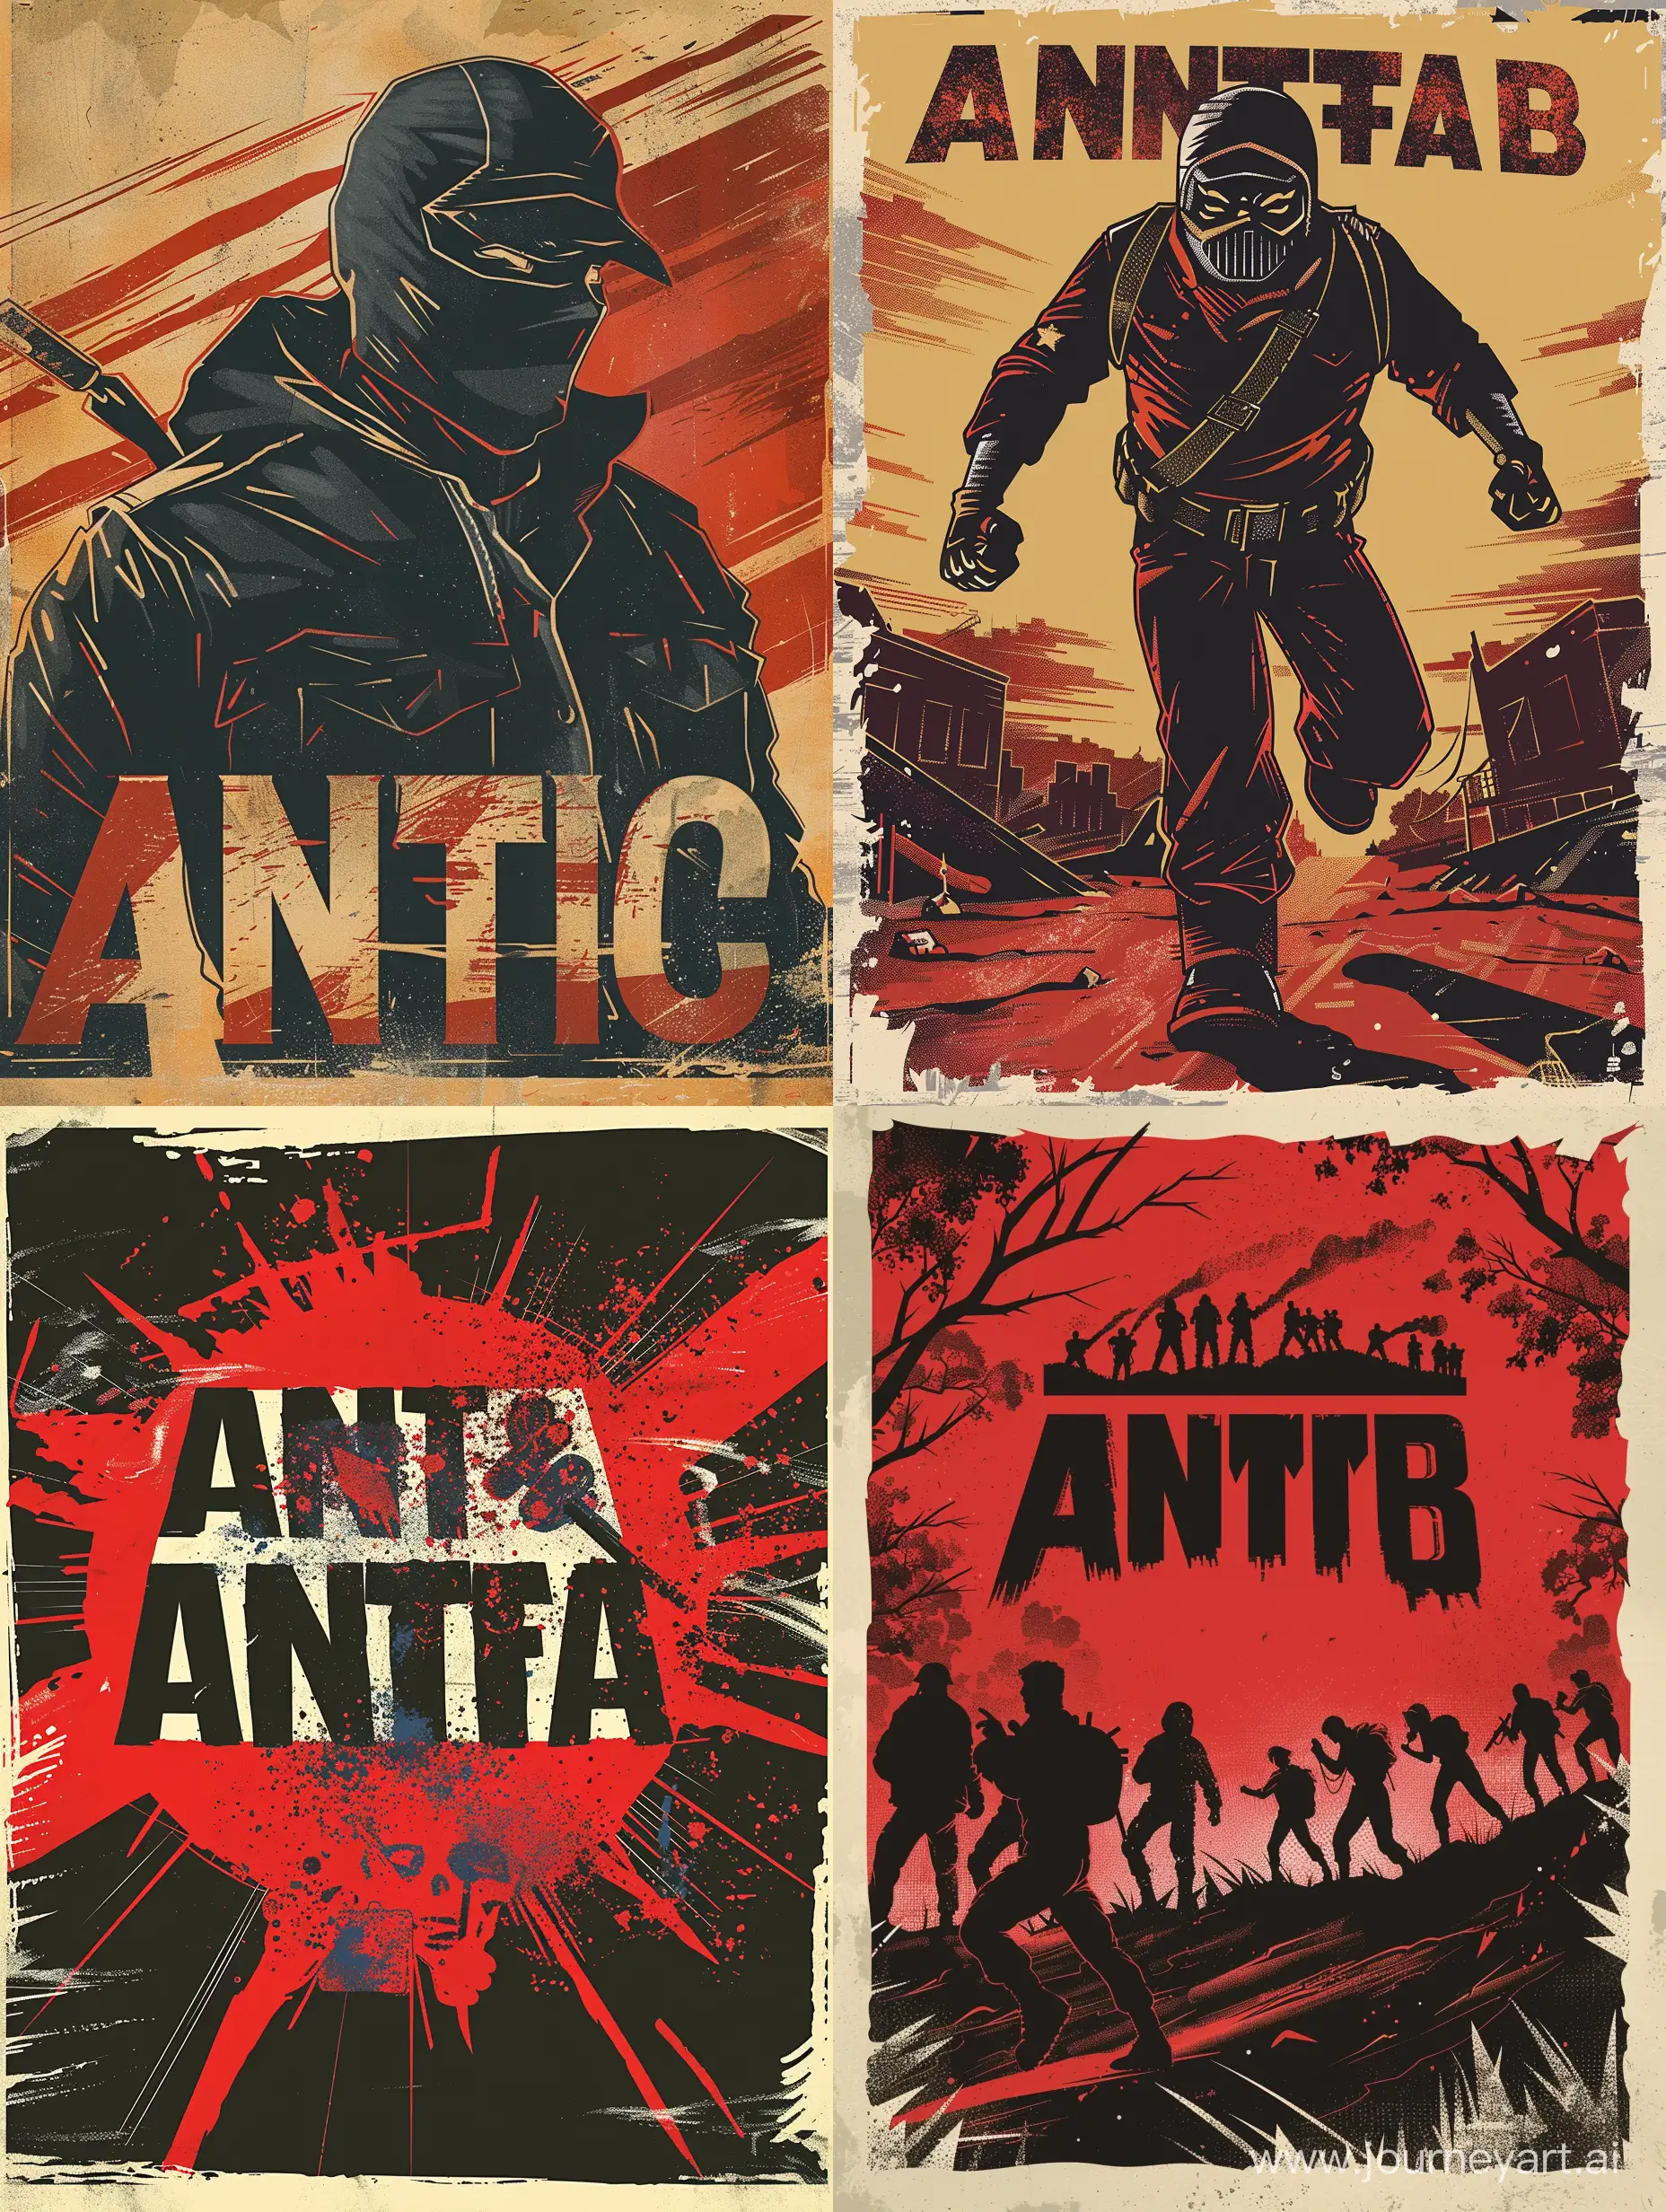 AntiFascist-Poster-Inspired-by-Soviet-Propaganda-Art